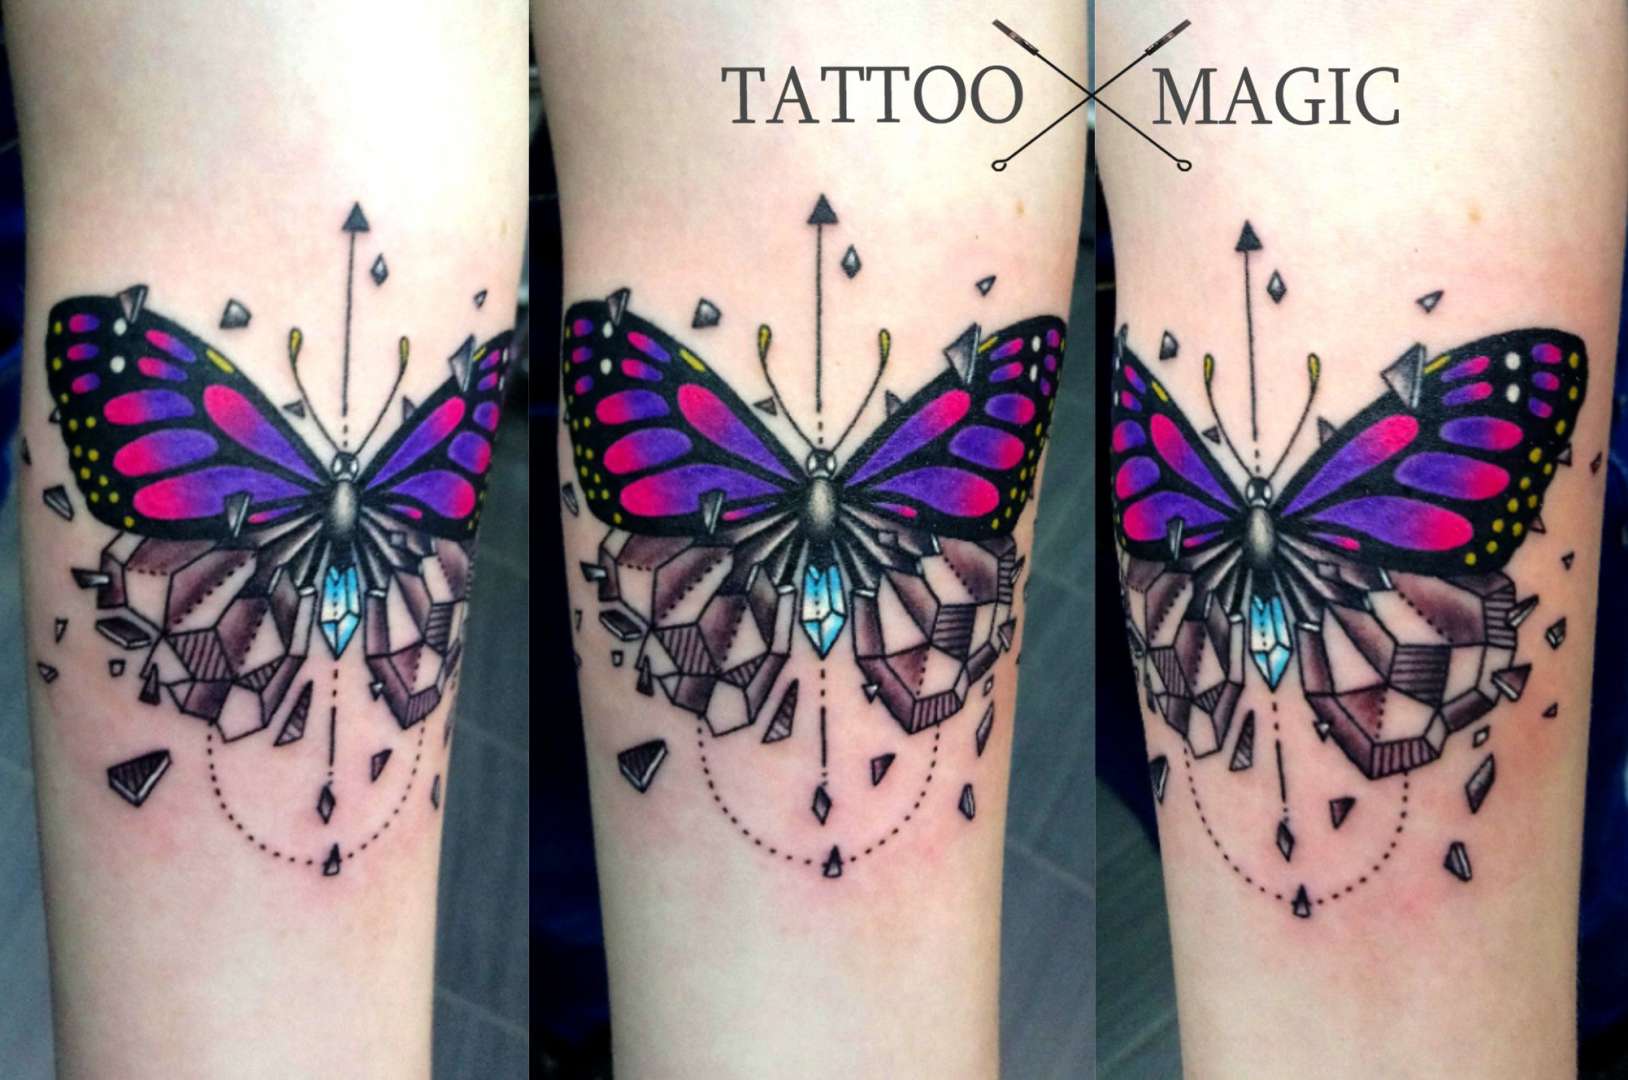 Tattoo webcams. Геометрическая бабочка тату. Тату бабочка геометрия. Цветное тату бабочки геометрия. Волшебные тату.